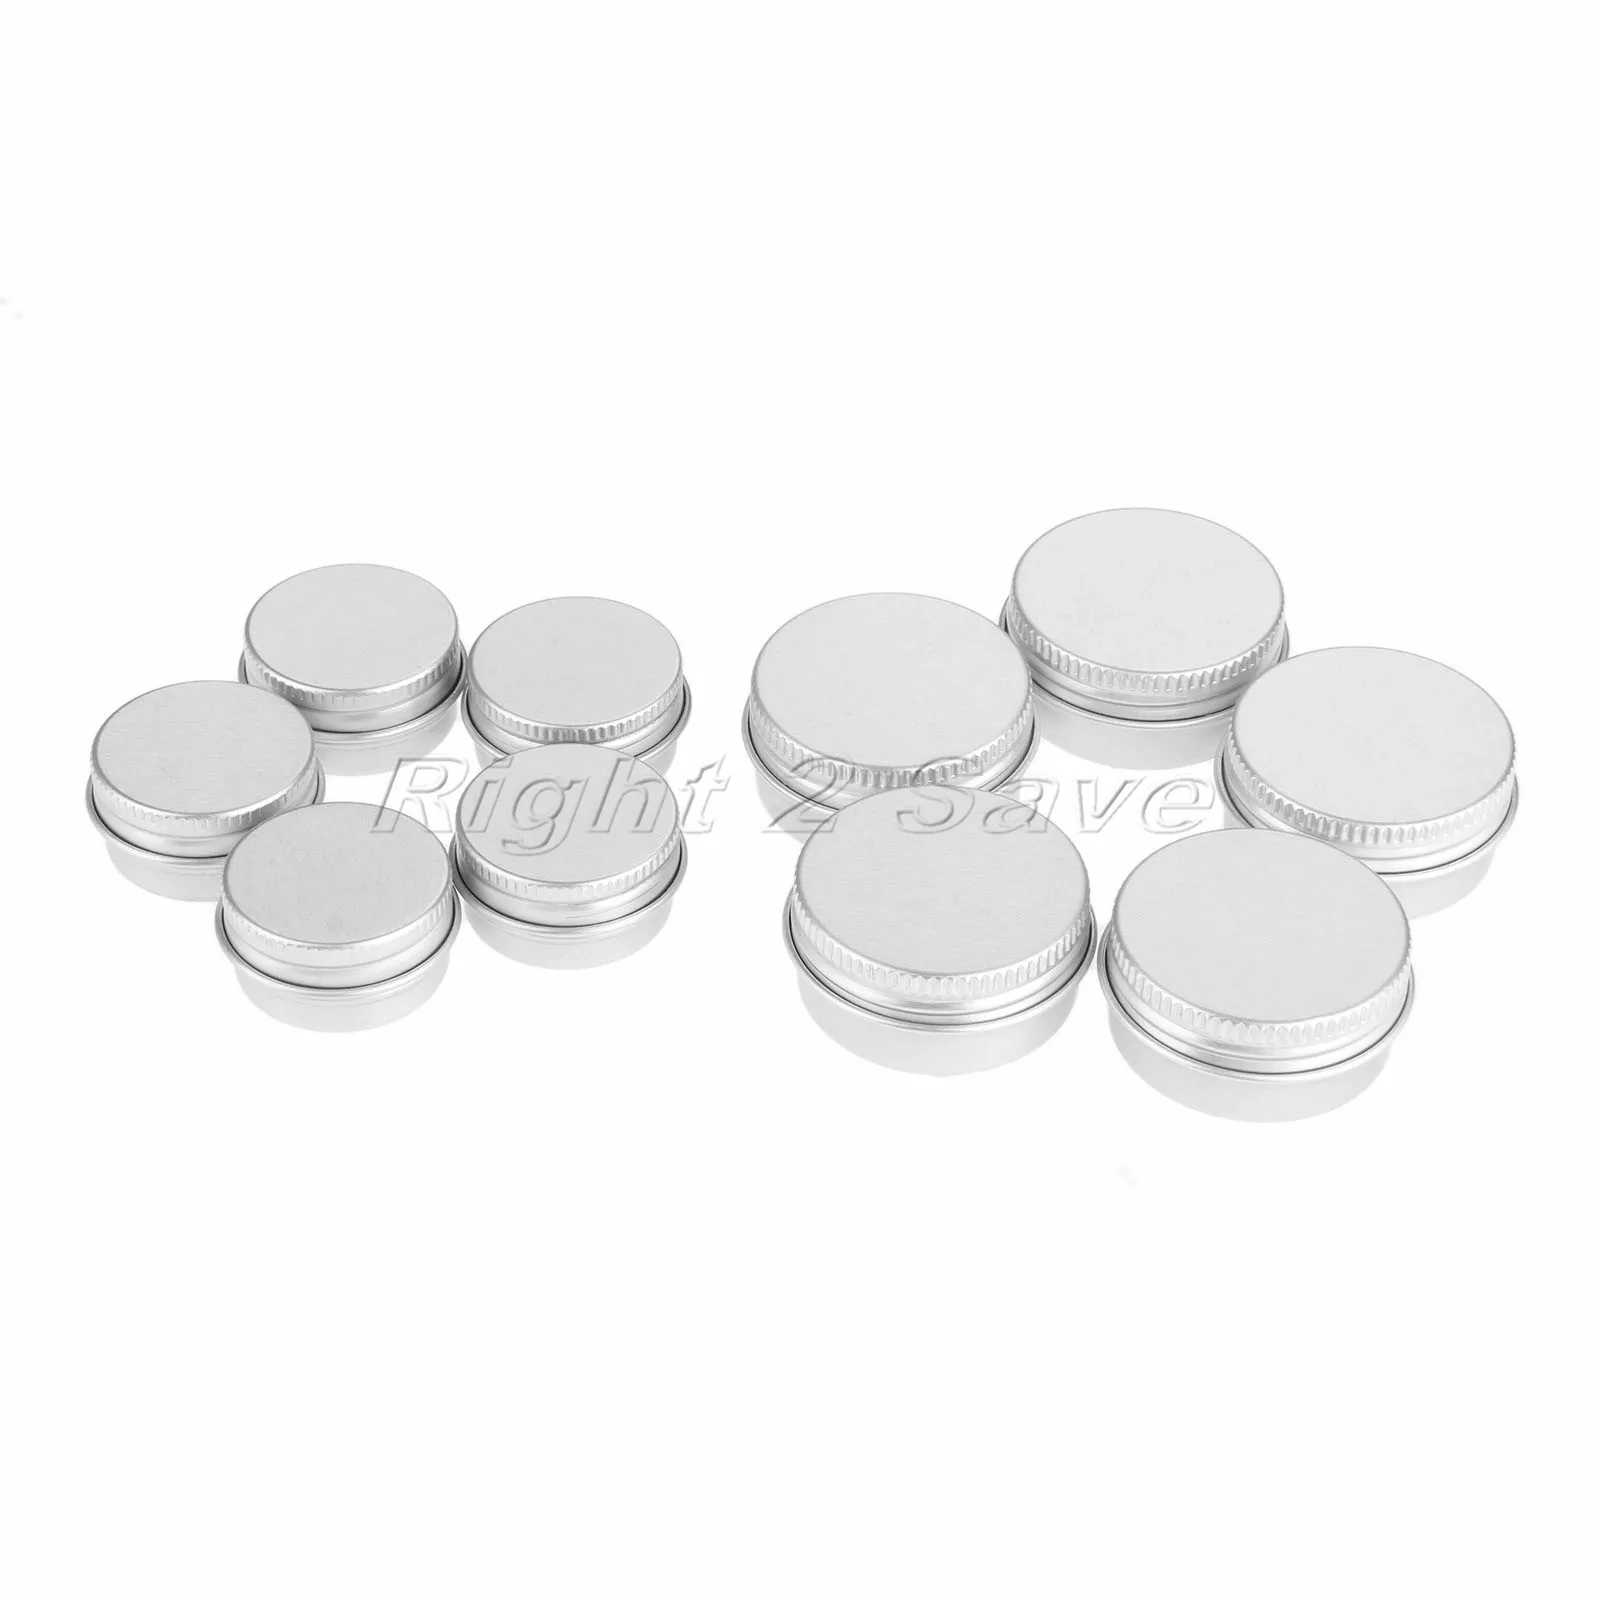 5pcs/lot Aluminum Jars 5g/10g Cosmetic Pots Empty Containers Metal Tins Makeup Cream Bottle Refillable Oil Portable Travel tool